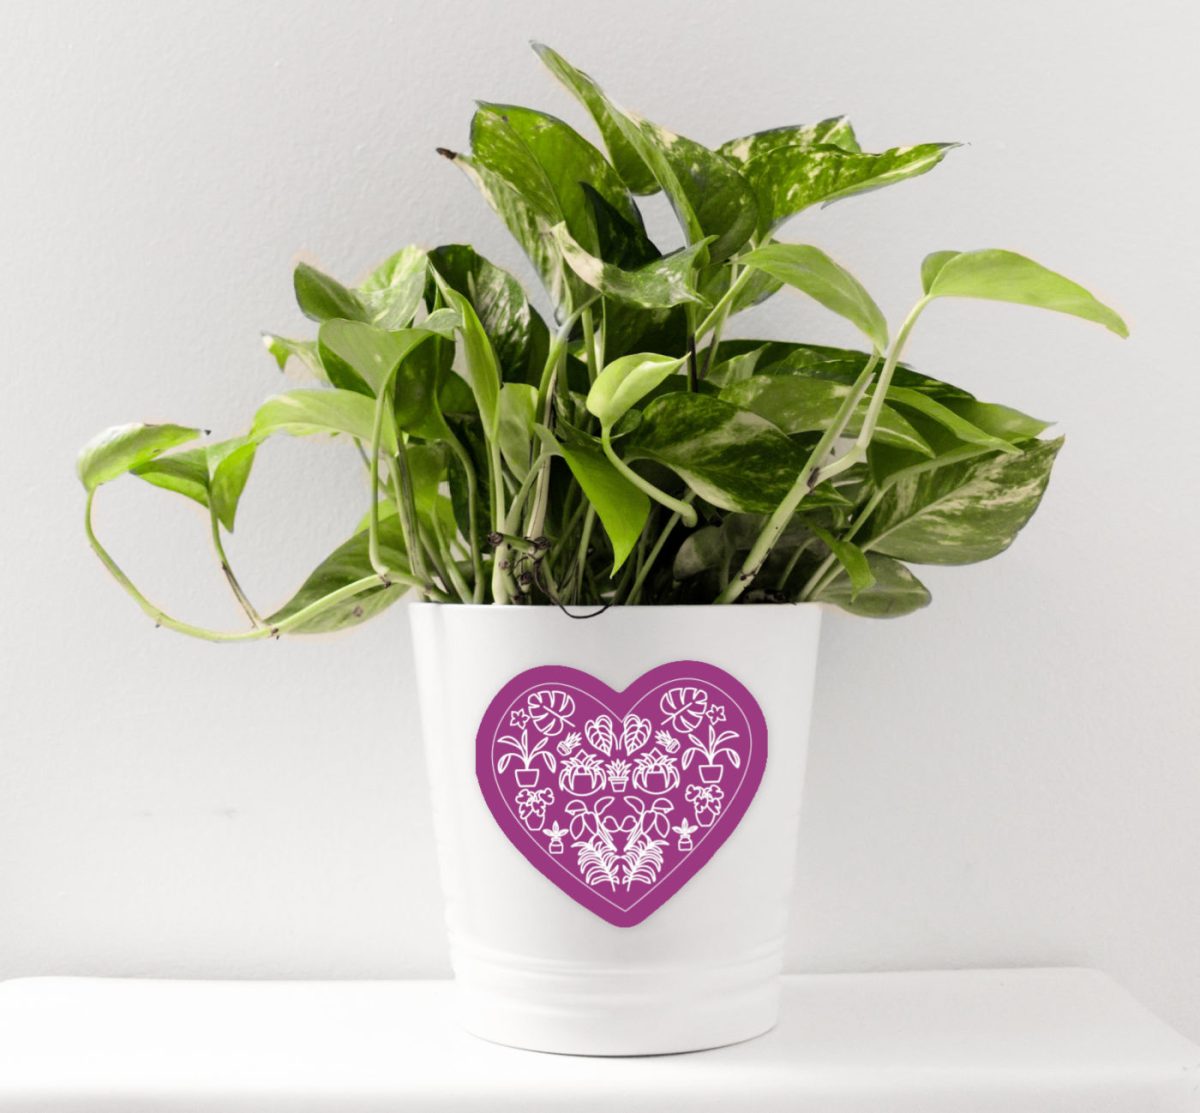 Purple plant heart sticker on a white pot holding a houseplant.